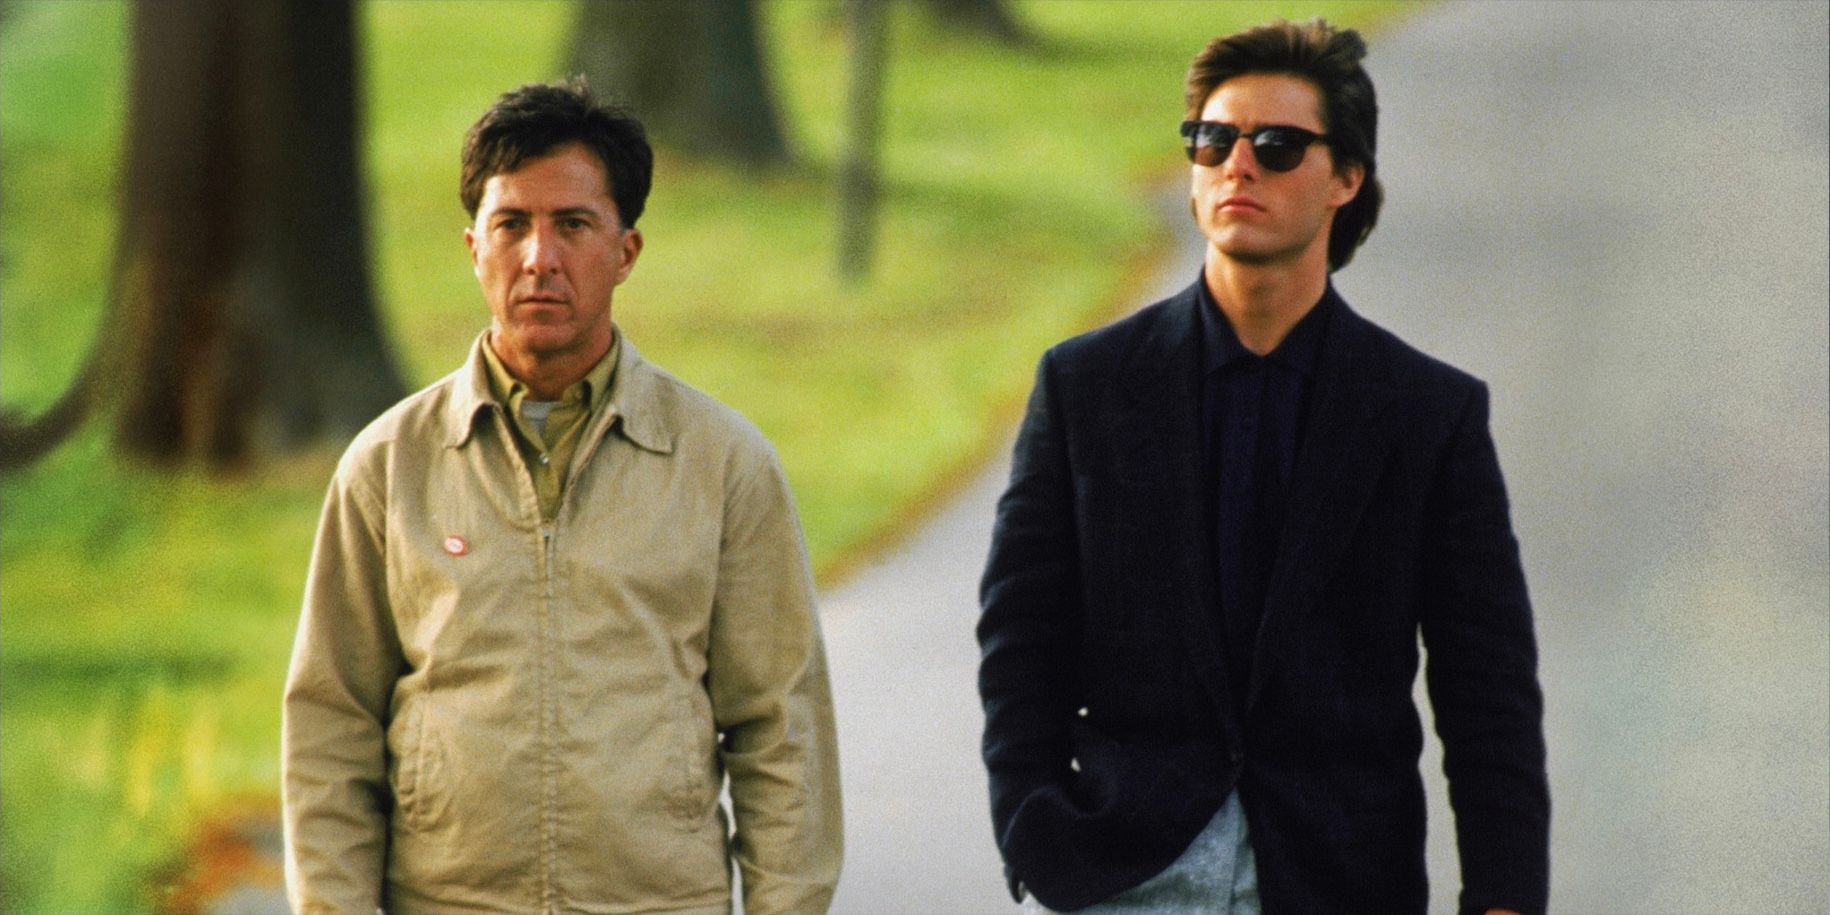 Tom Cruise as Charlie Babbitt in Rain Man walking with Dustin Hoffman